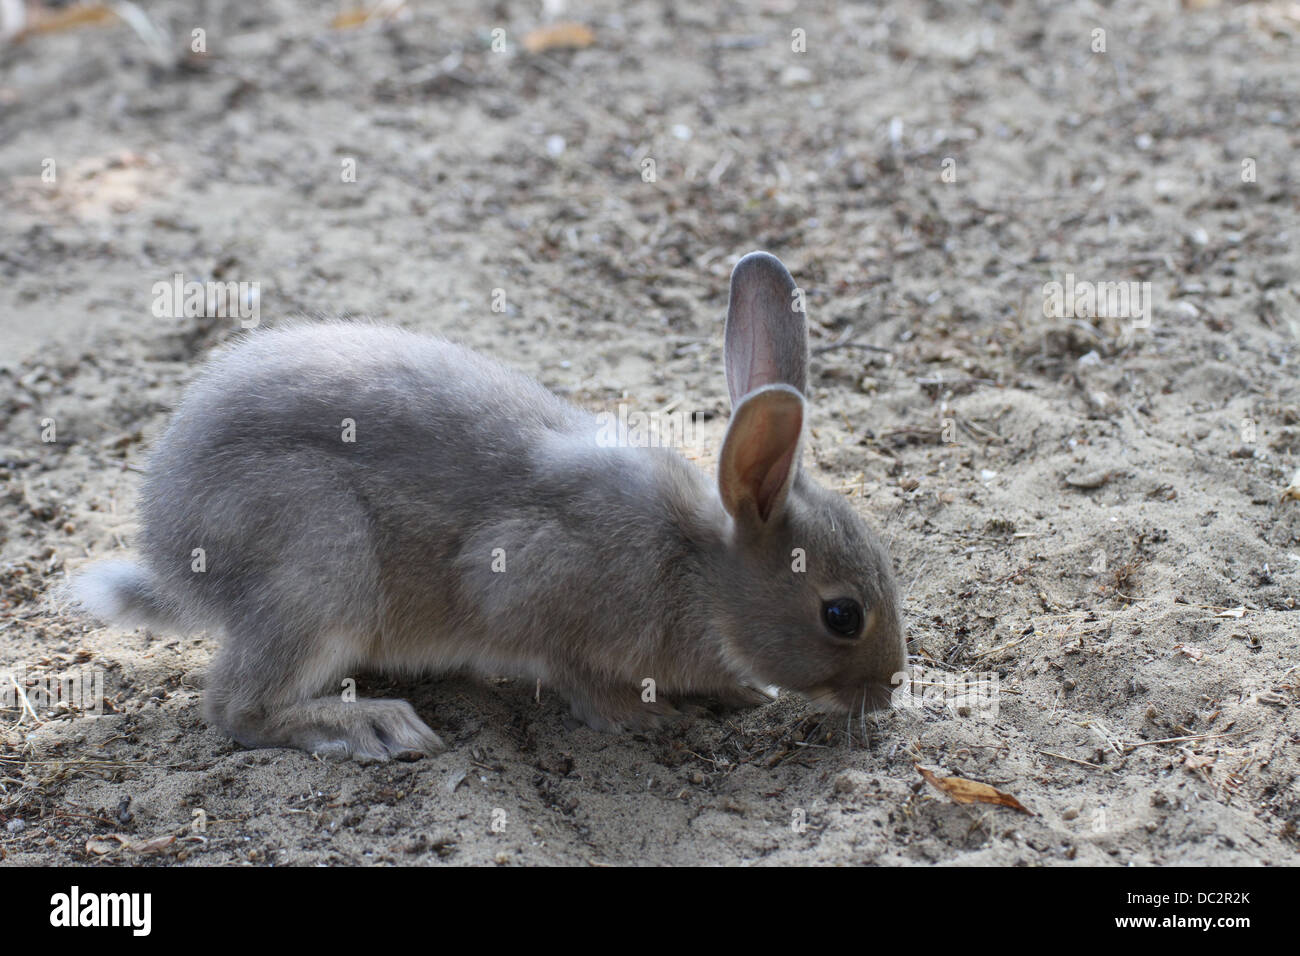 Rabbit with wild gray hair among the Prairie sand Stock Photo